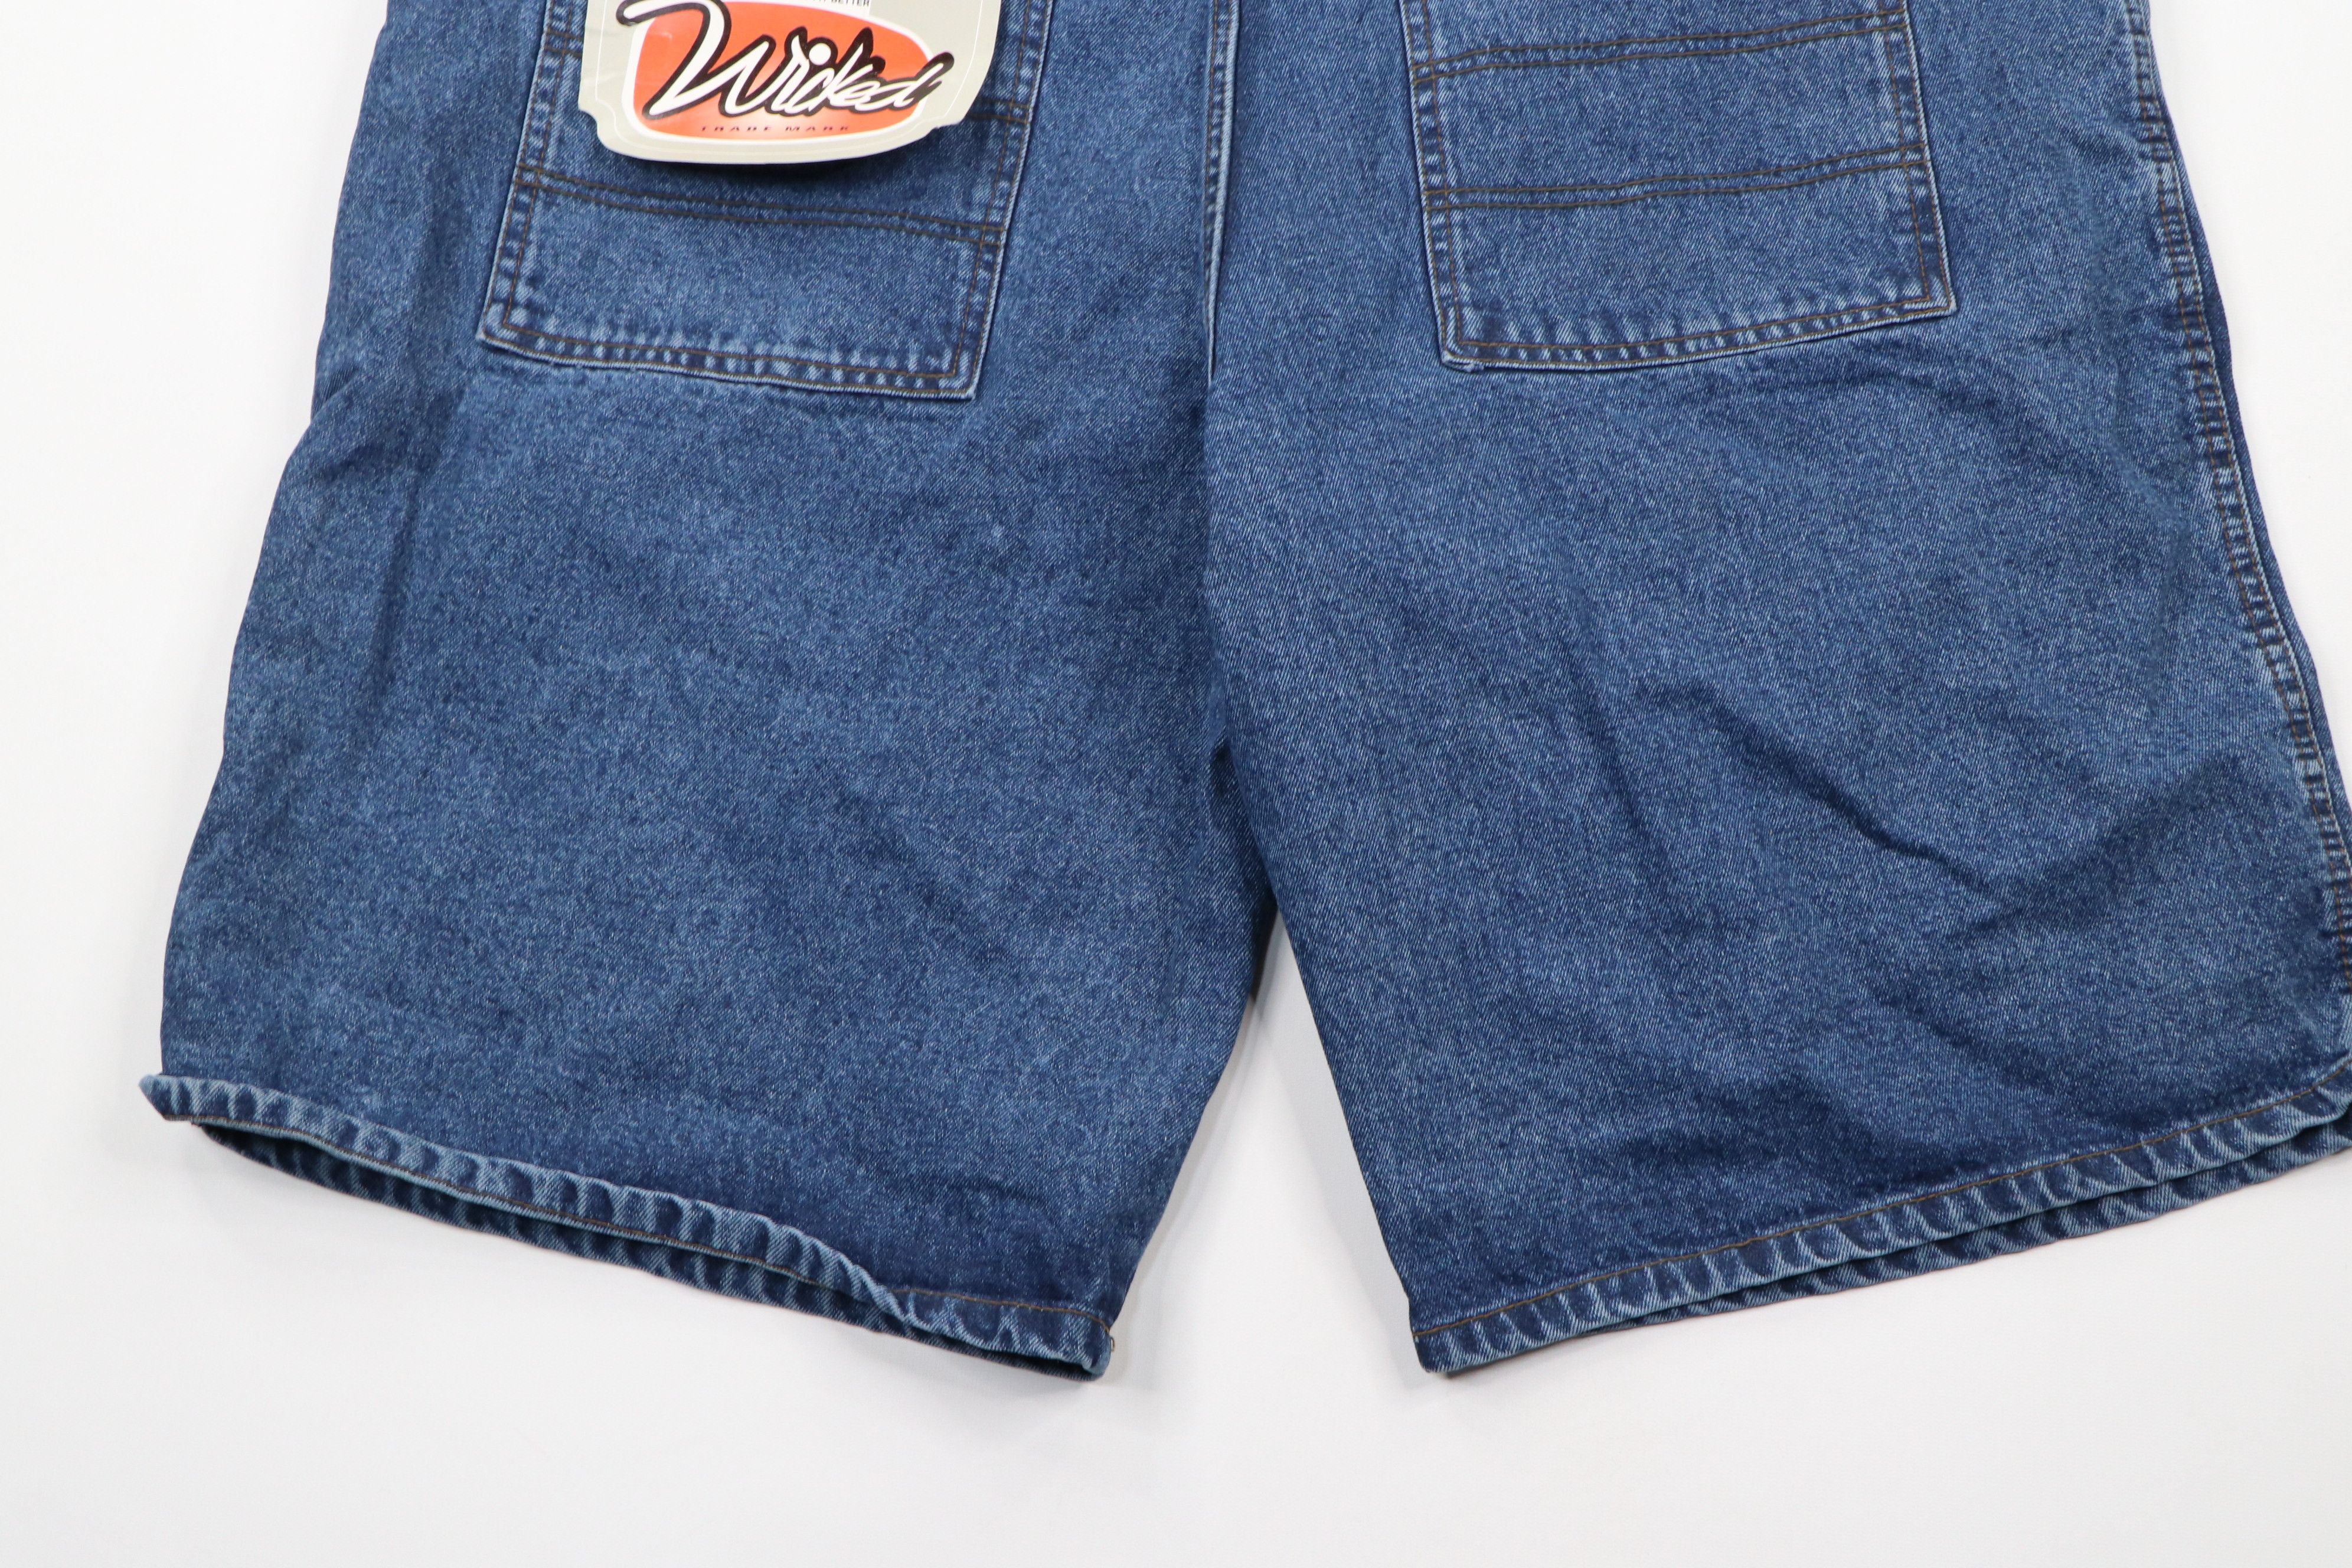 Vintage NOS Vintage 90s Streetwear Baggy Hip Hop Denim Shorts Size US 44 / EU 60 - 7 Preview